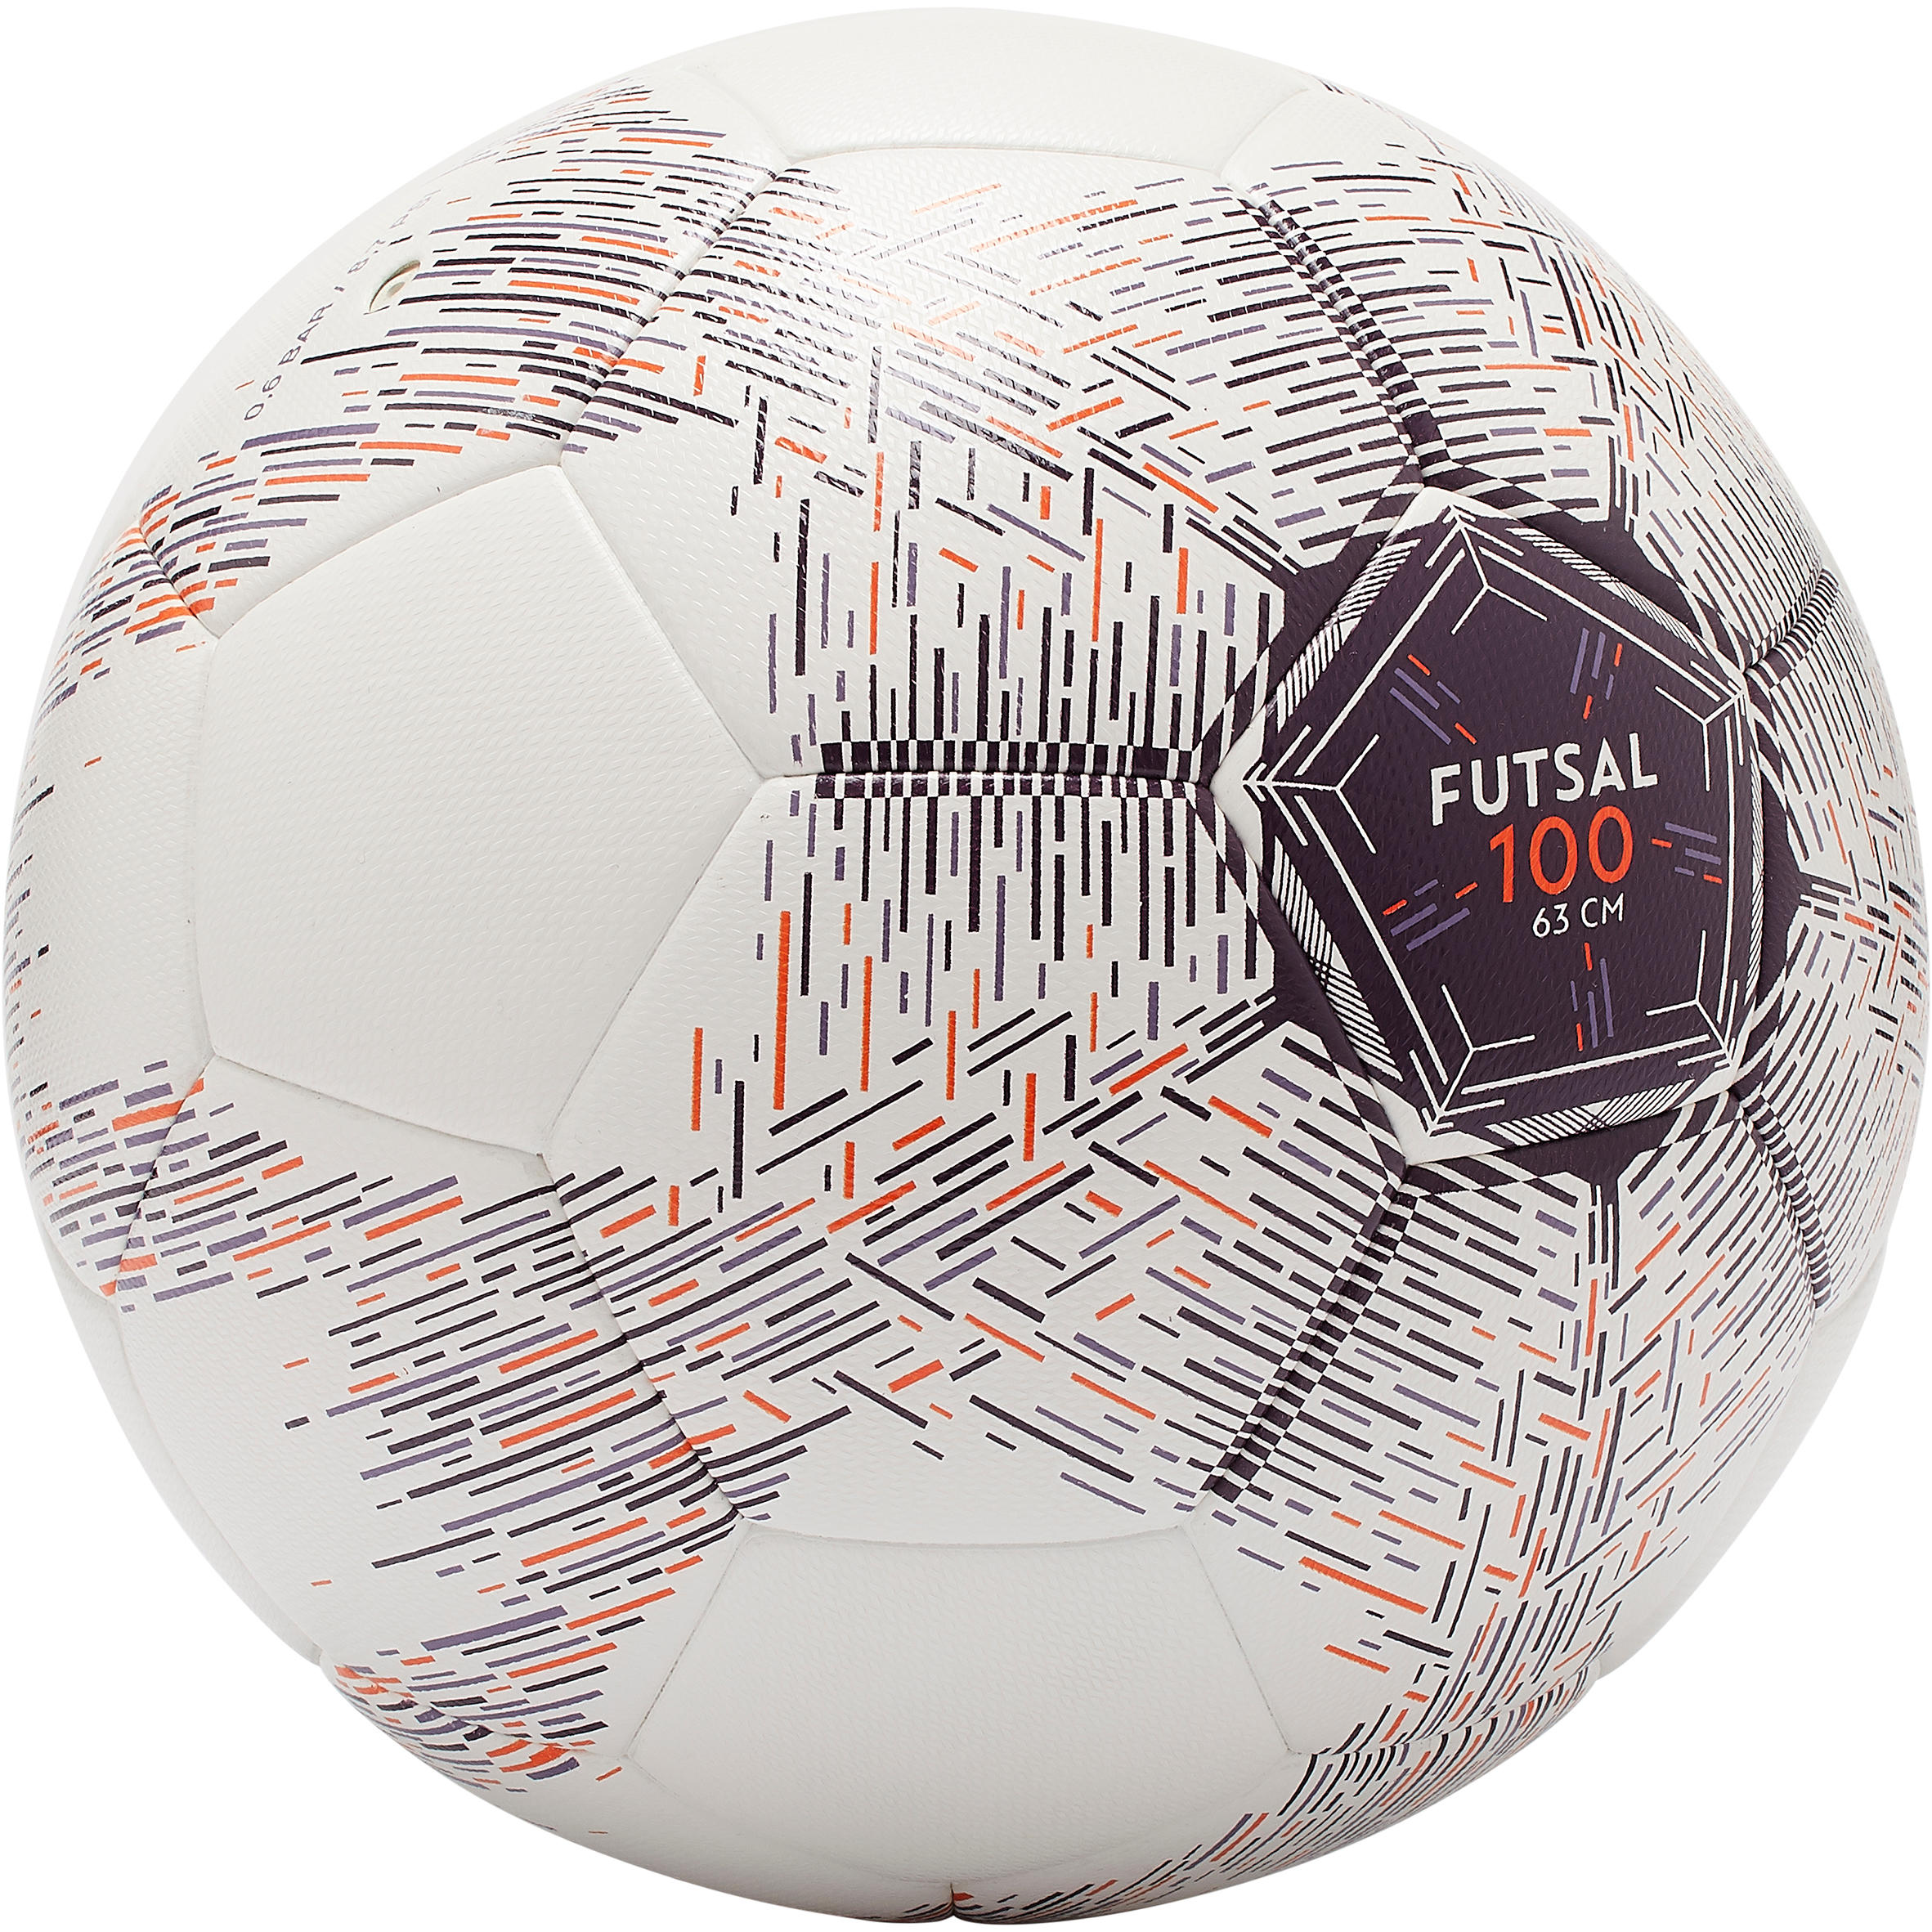 Minge Futsal 100 Hybride 63 cm Alb La Oferta Online decathlon imagine La Oferta Online